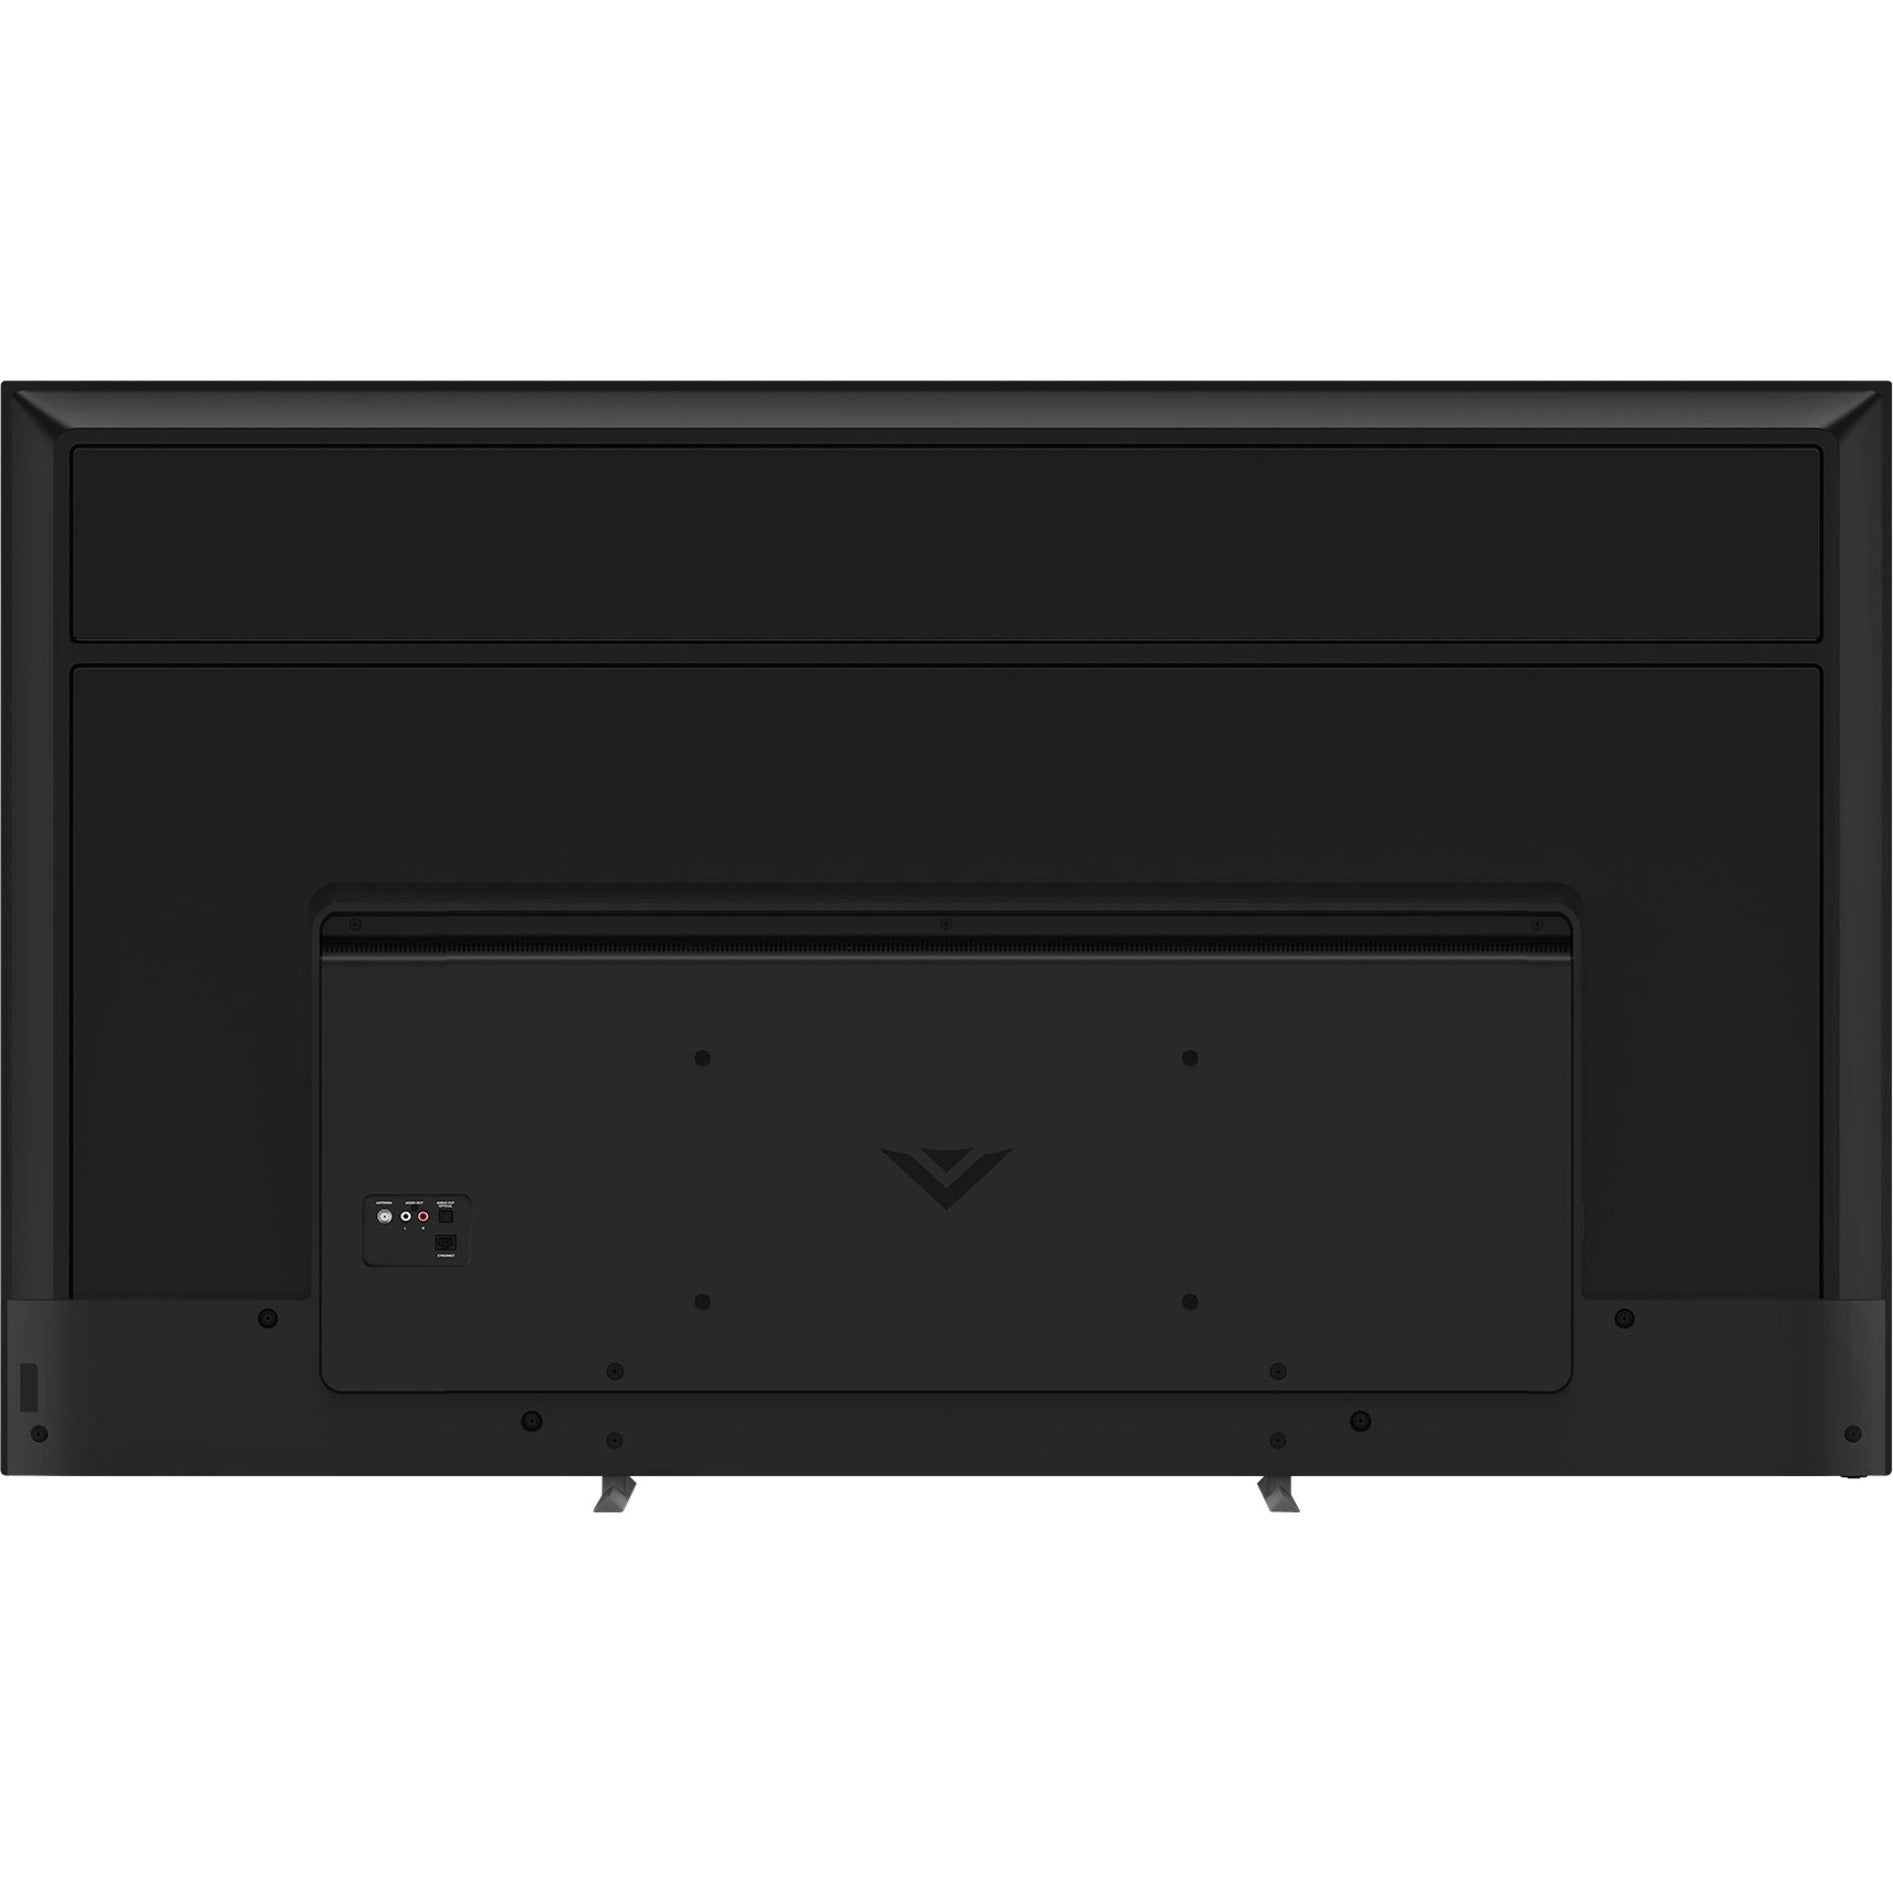 VIZIO M75Q7-J03 M-Series Quantum 75" Class 4K HDR Smart TV, Bezel-free Design, Dolby Vision, Chromecast